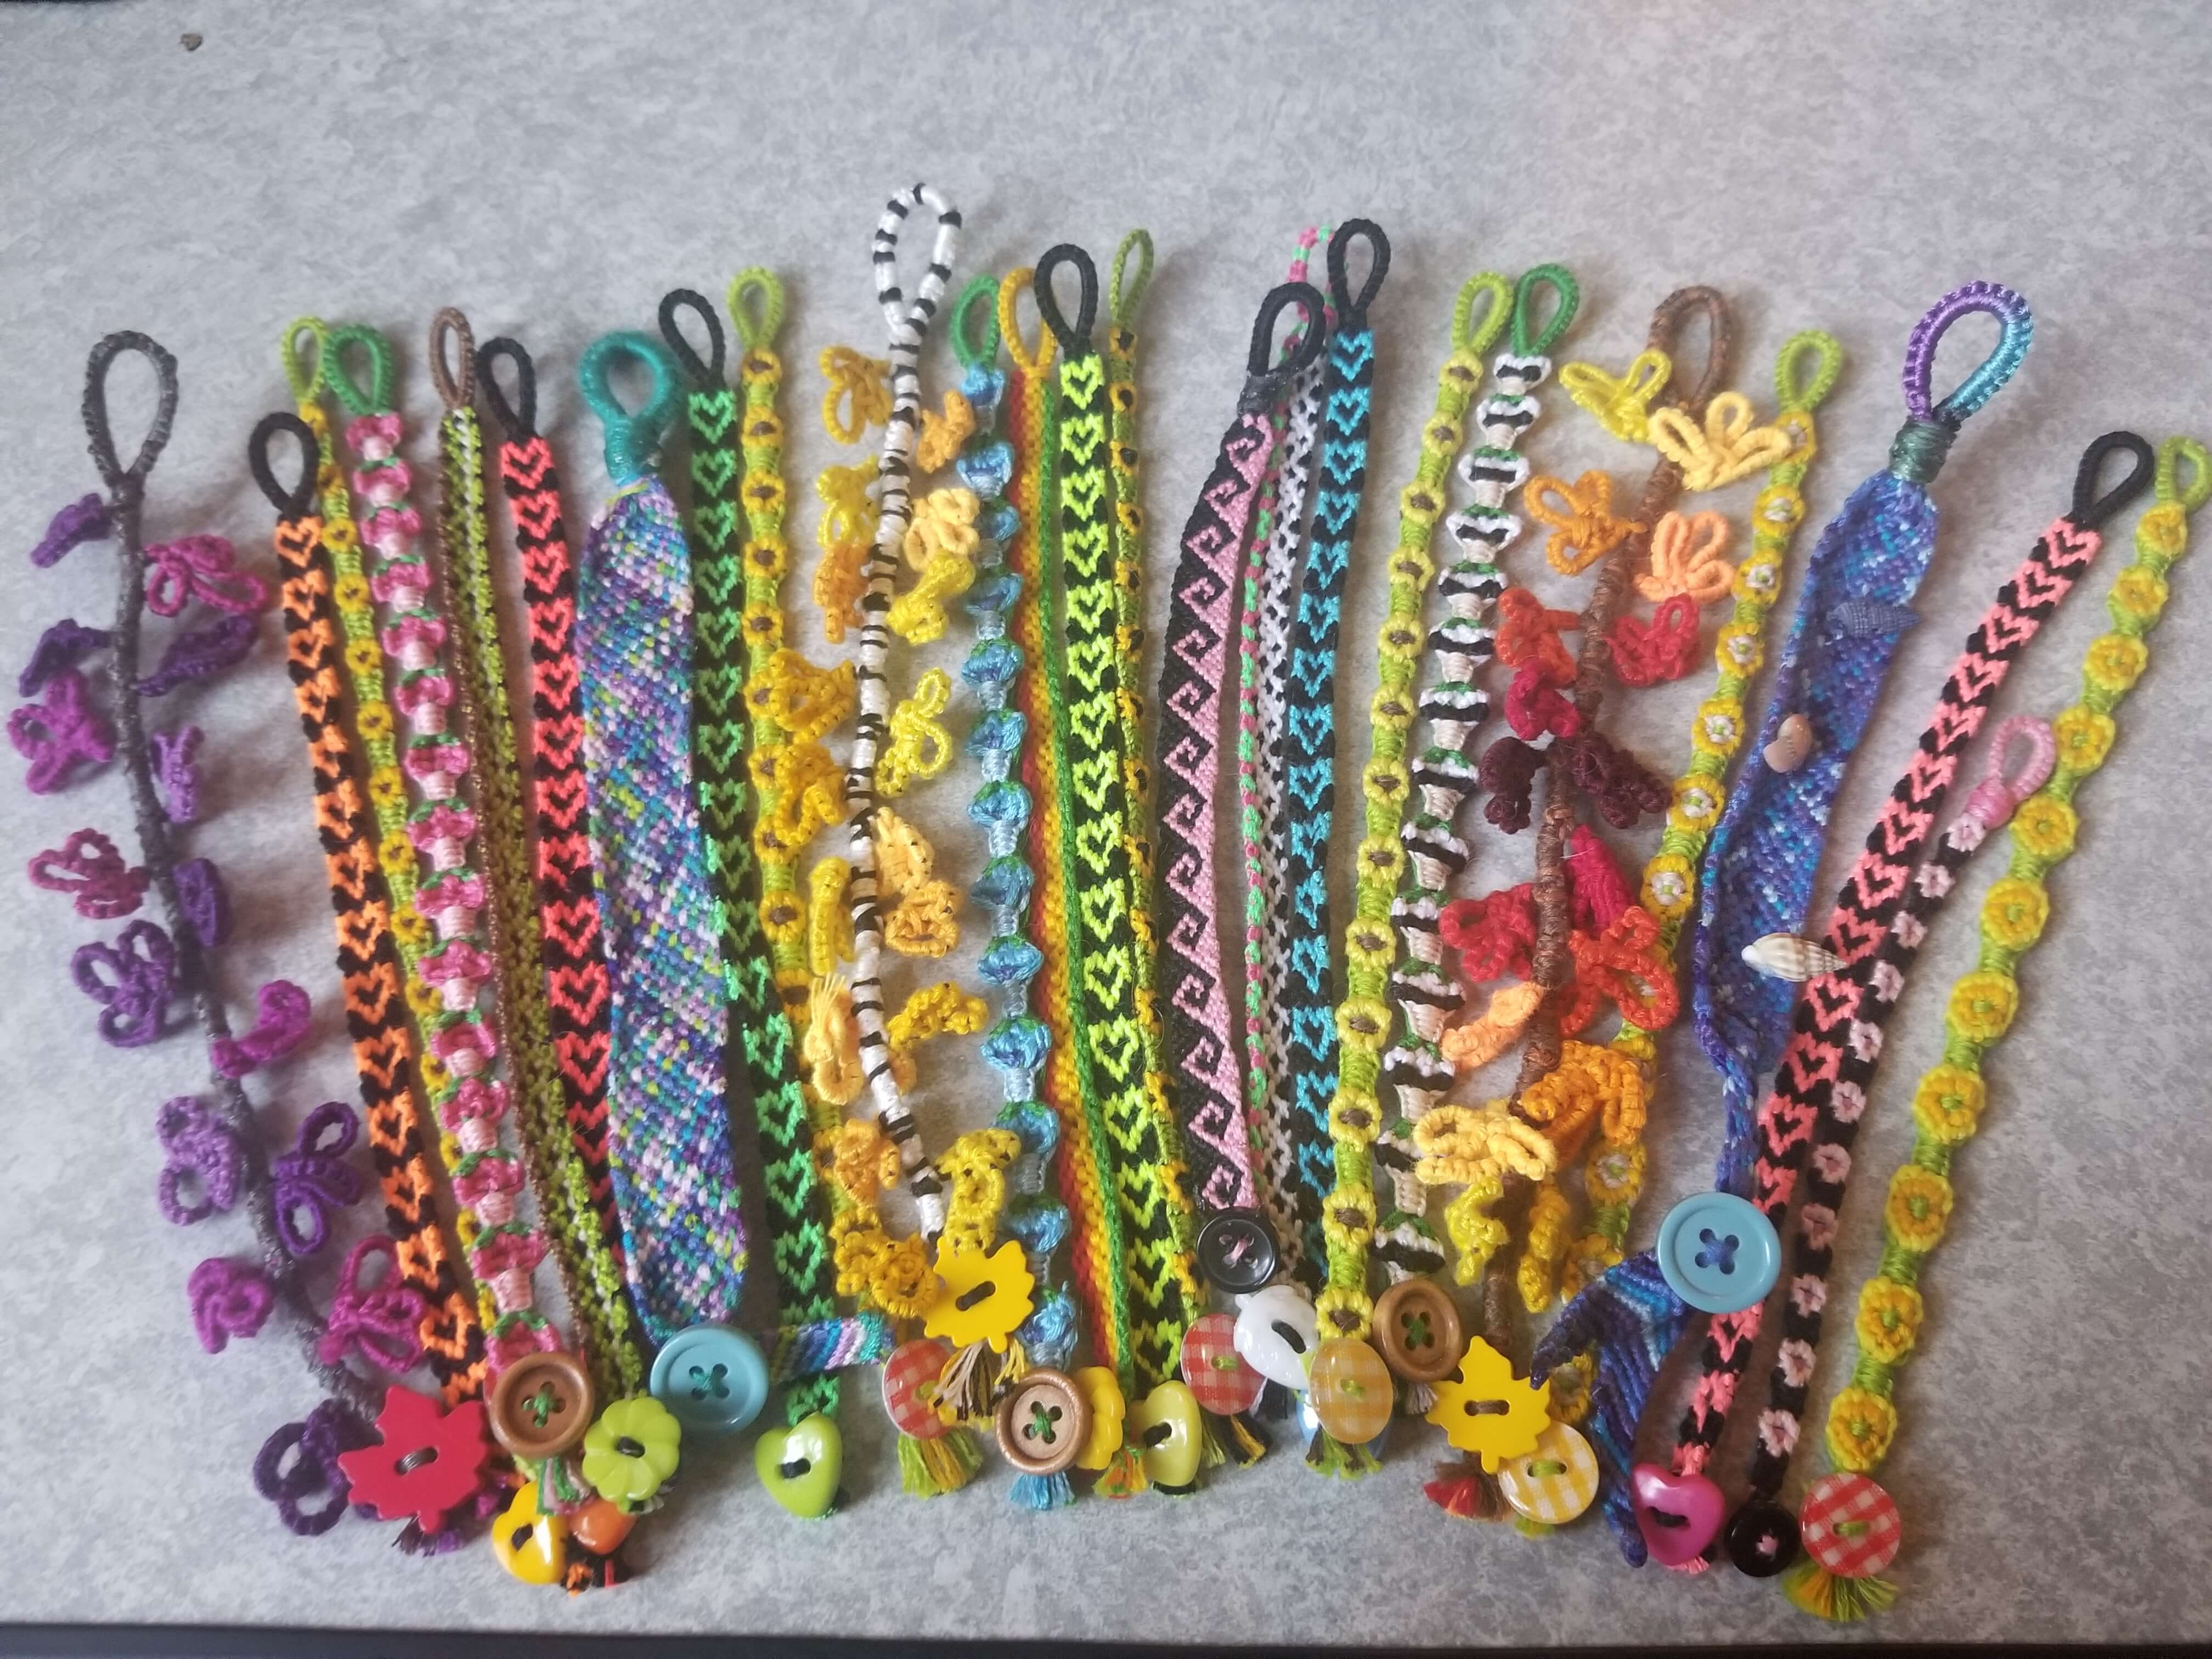 a spread of colorful woven accessories